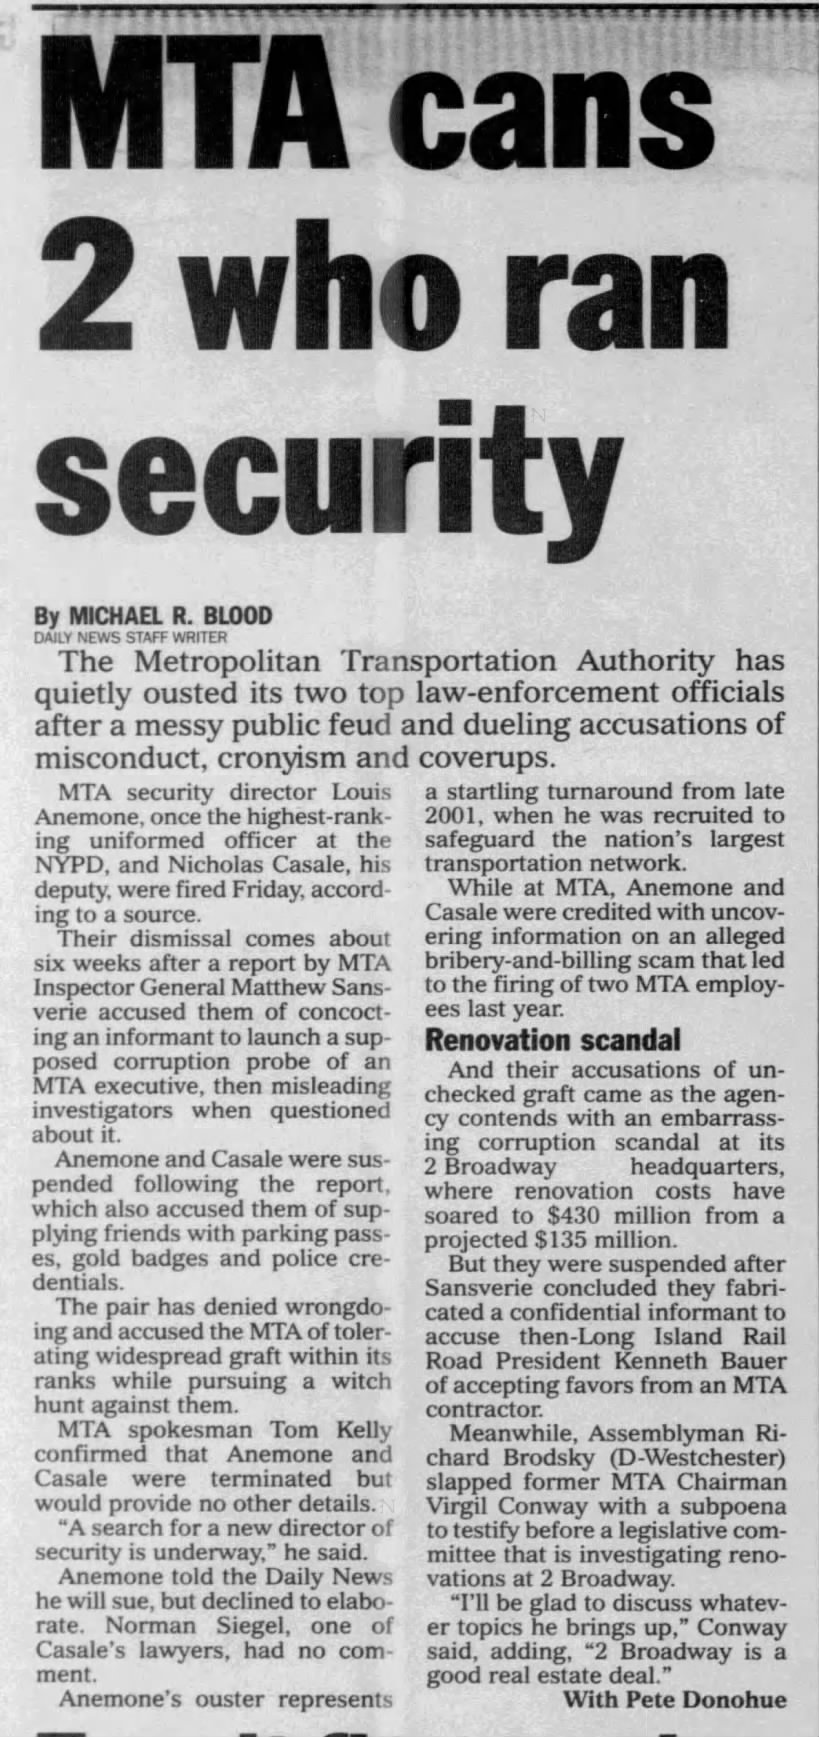 MTA cans 2 who ran security